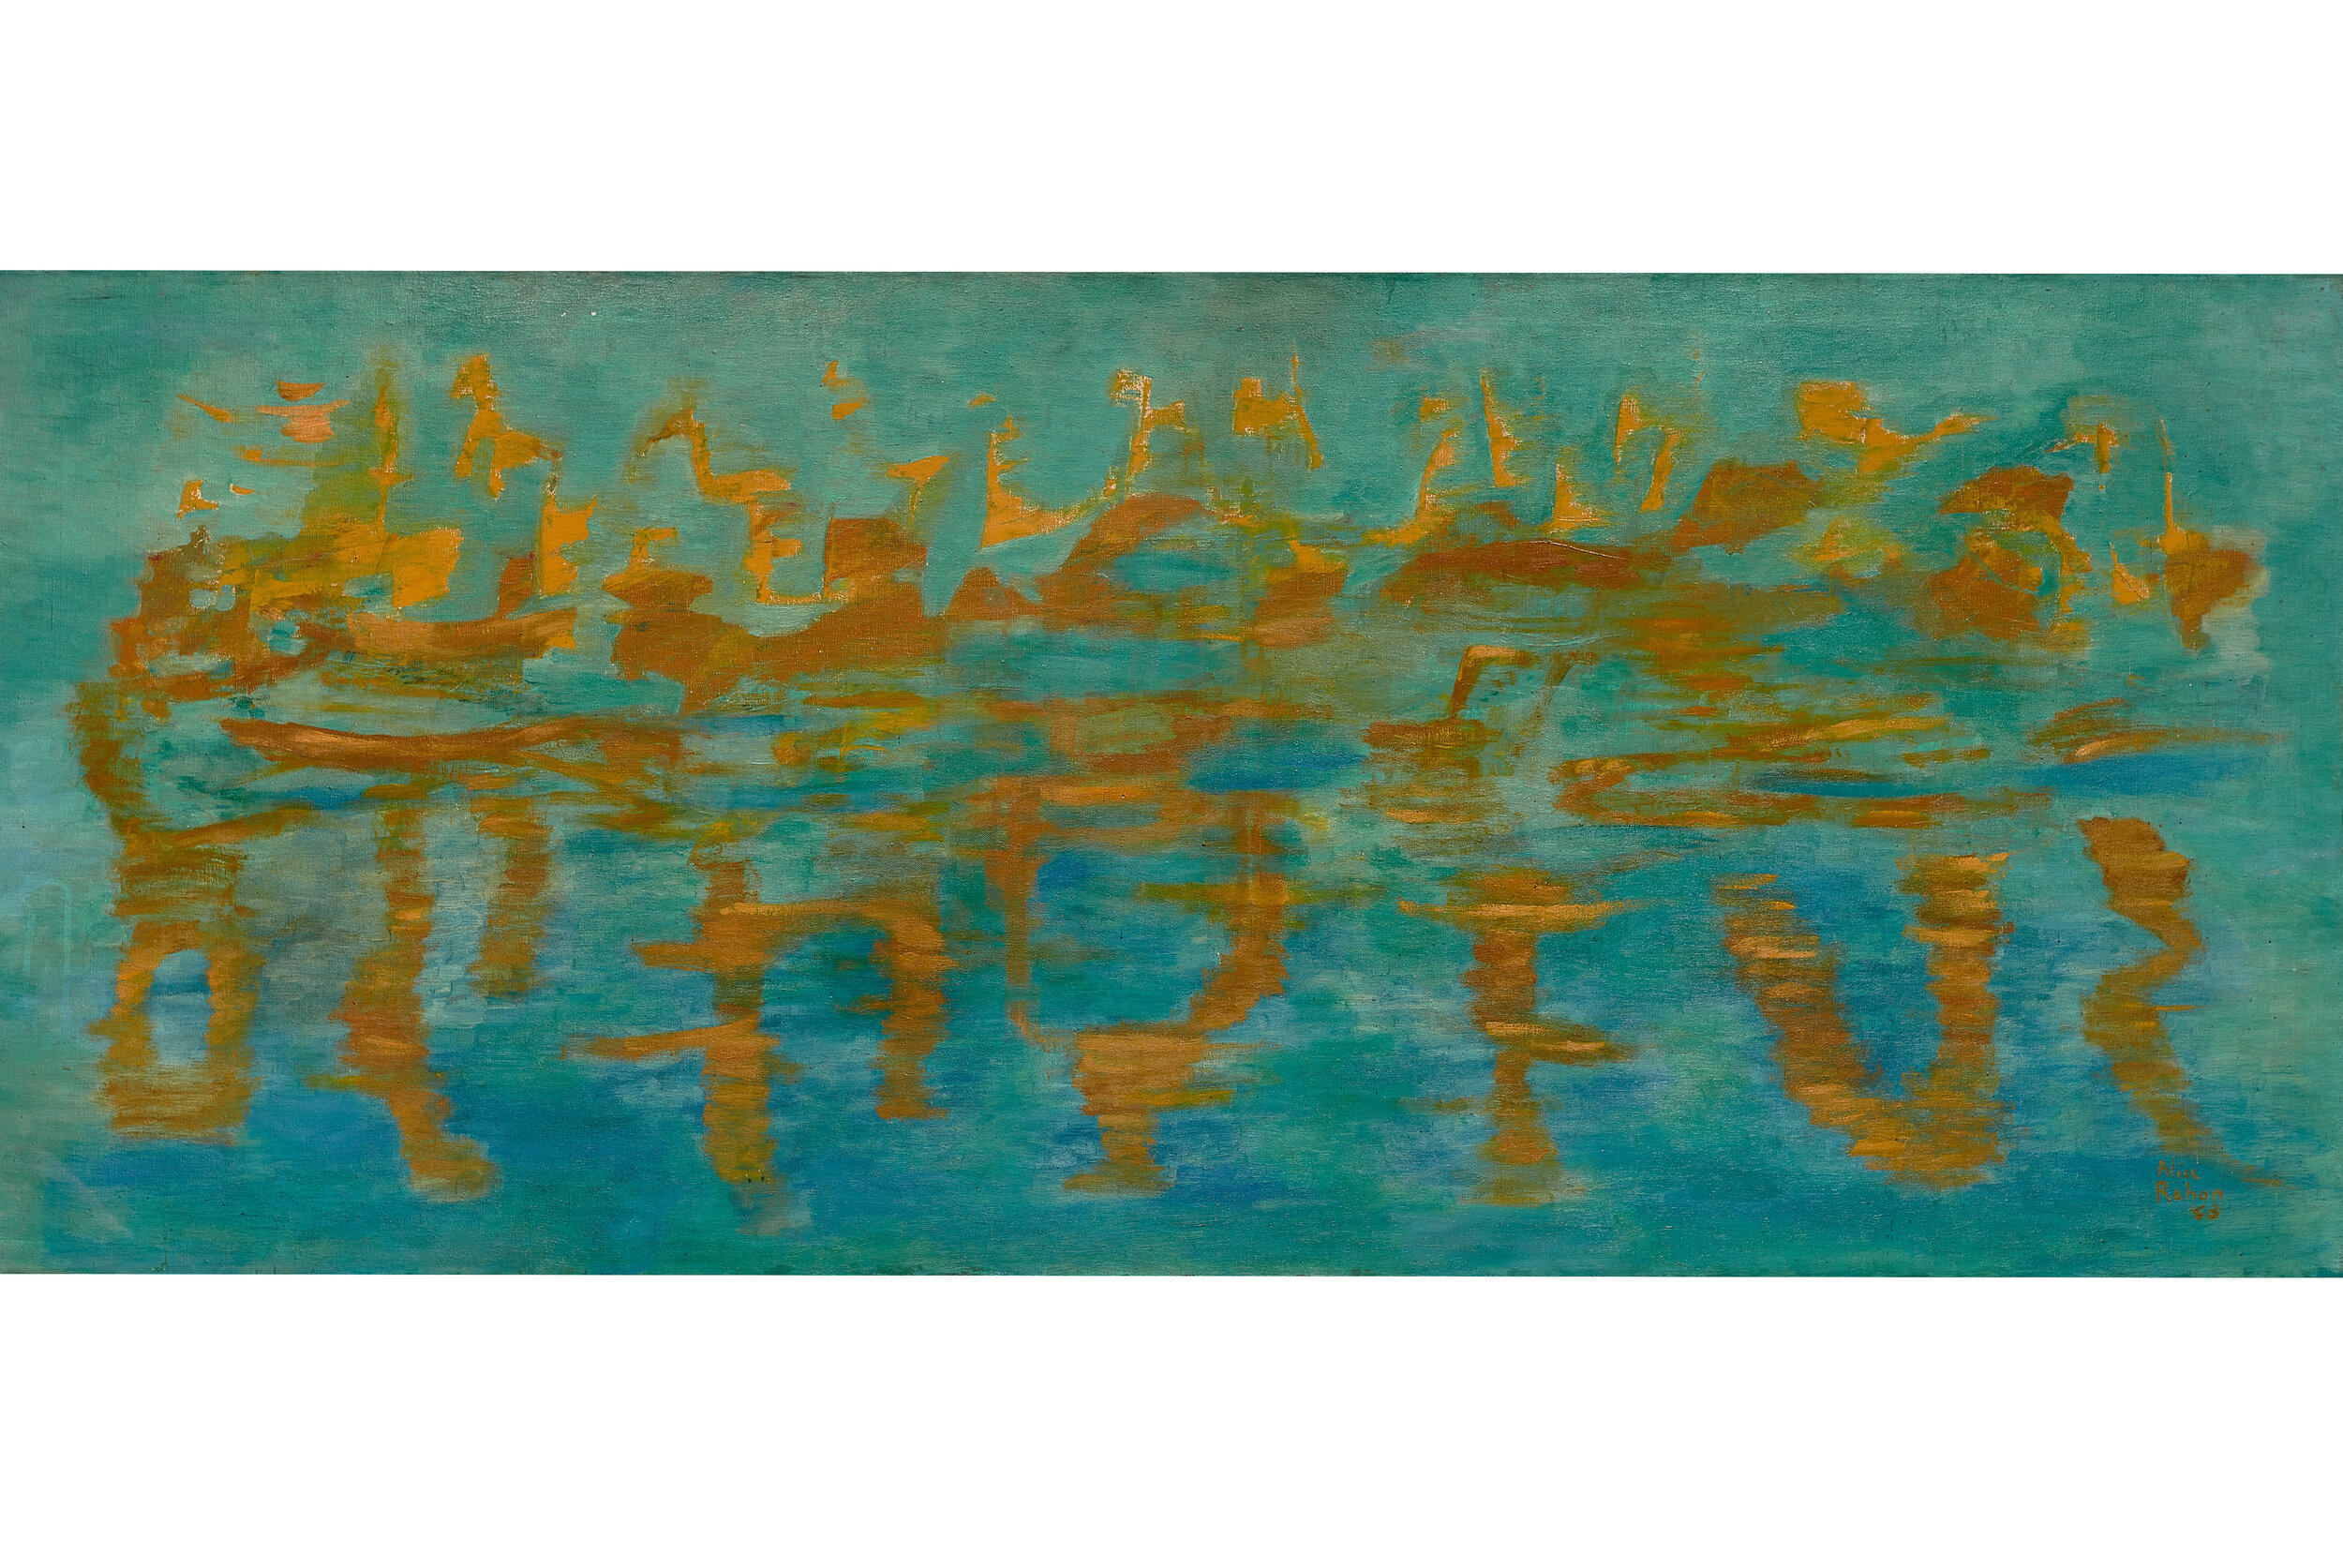  Alice Rahon,  Byblos , 1963, oil on canvas, 27 3/4 x 67 1/8 inches (70.5 x 170.5 cm) 